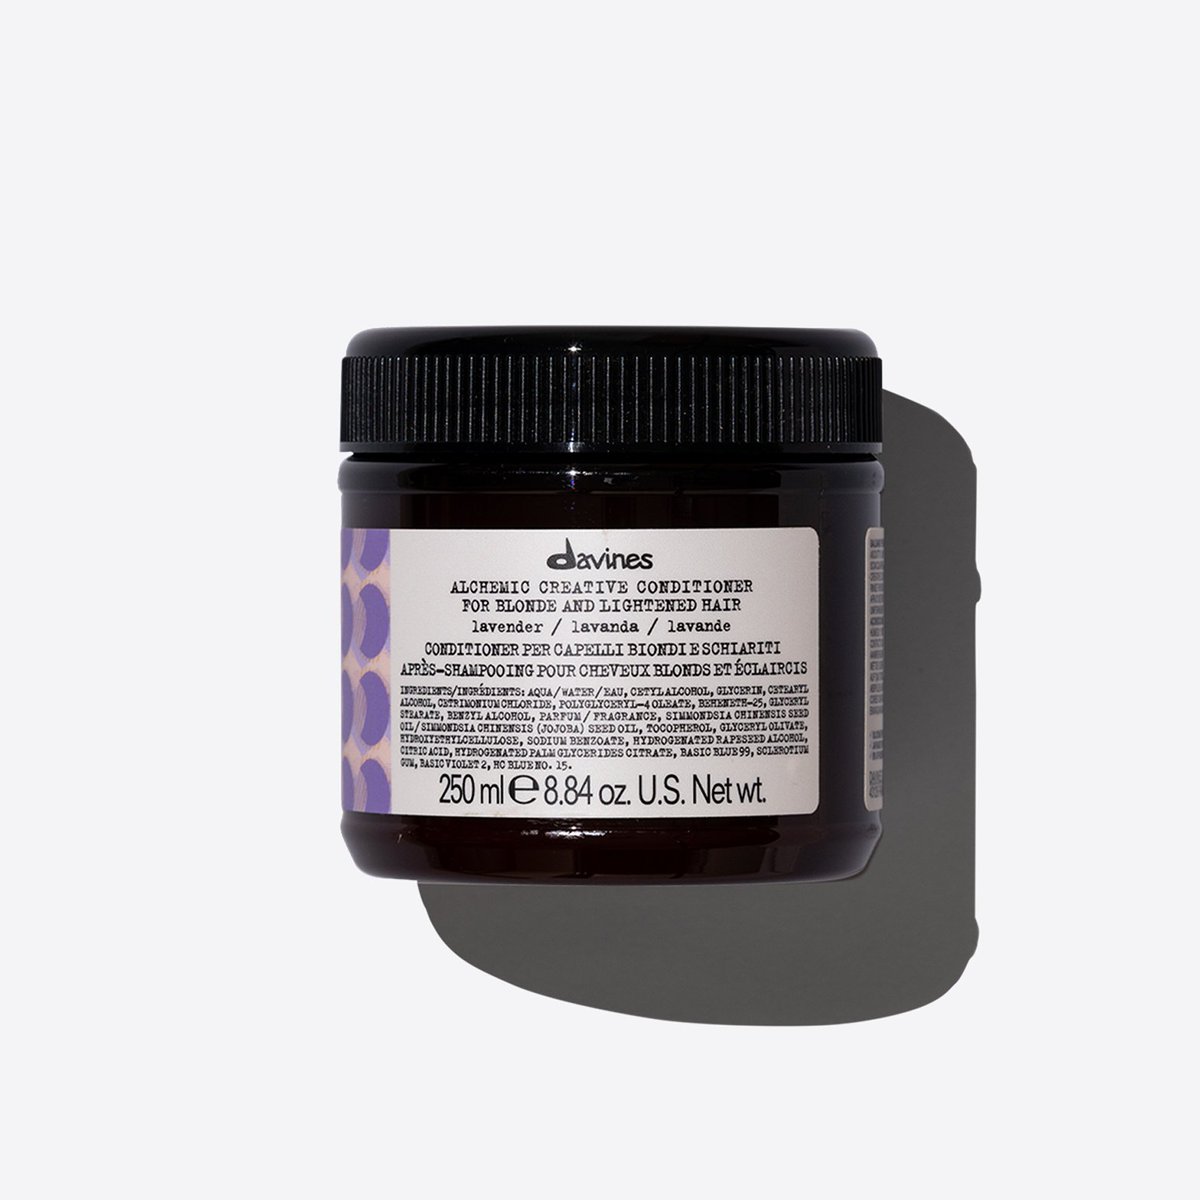 Davines Creative Conditioner - Lavender (For Light Hair)